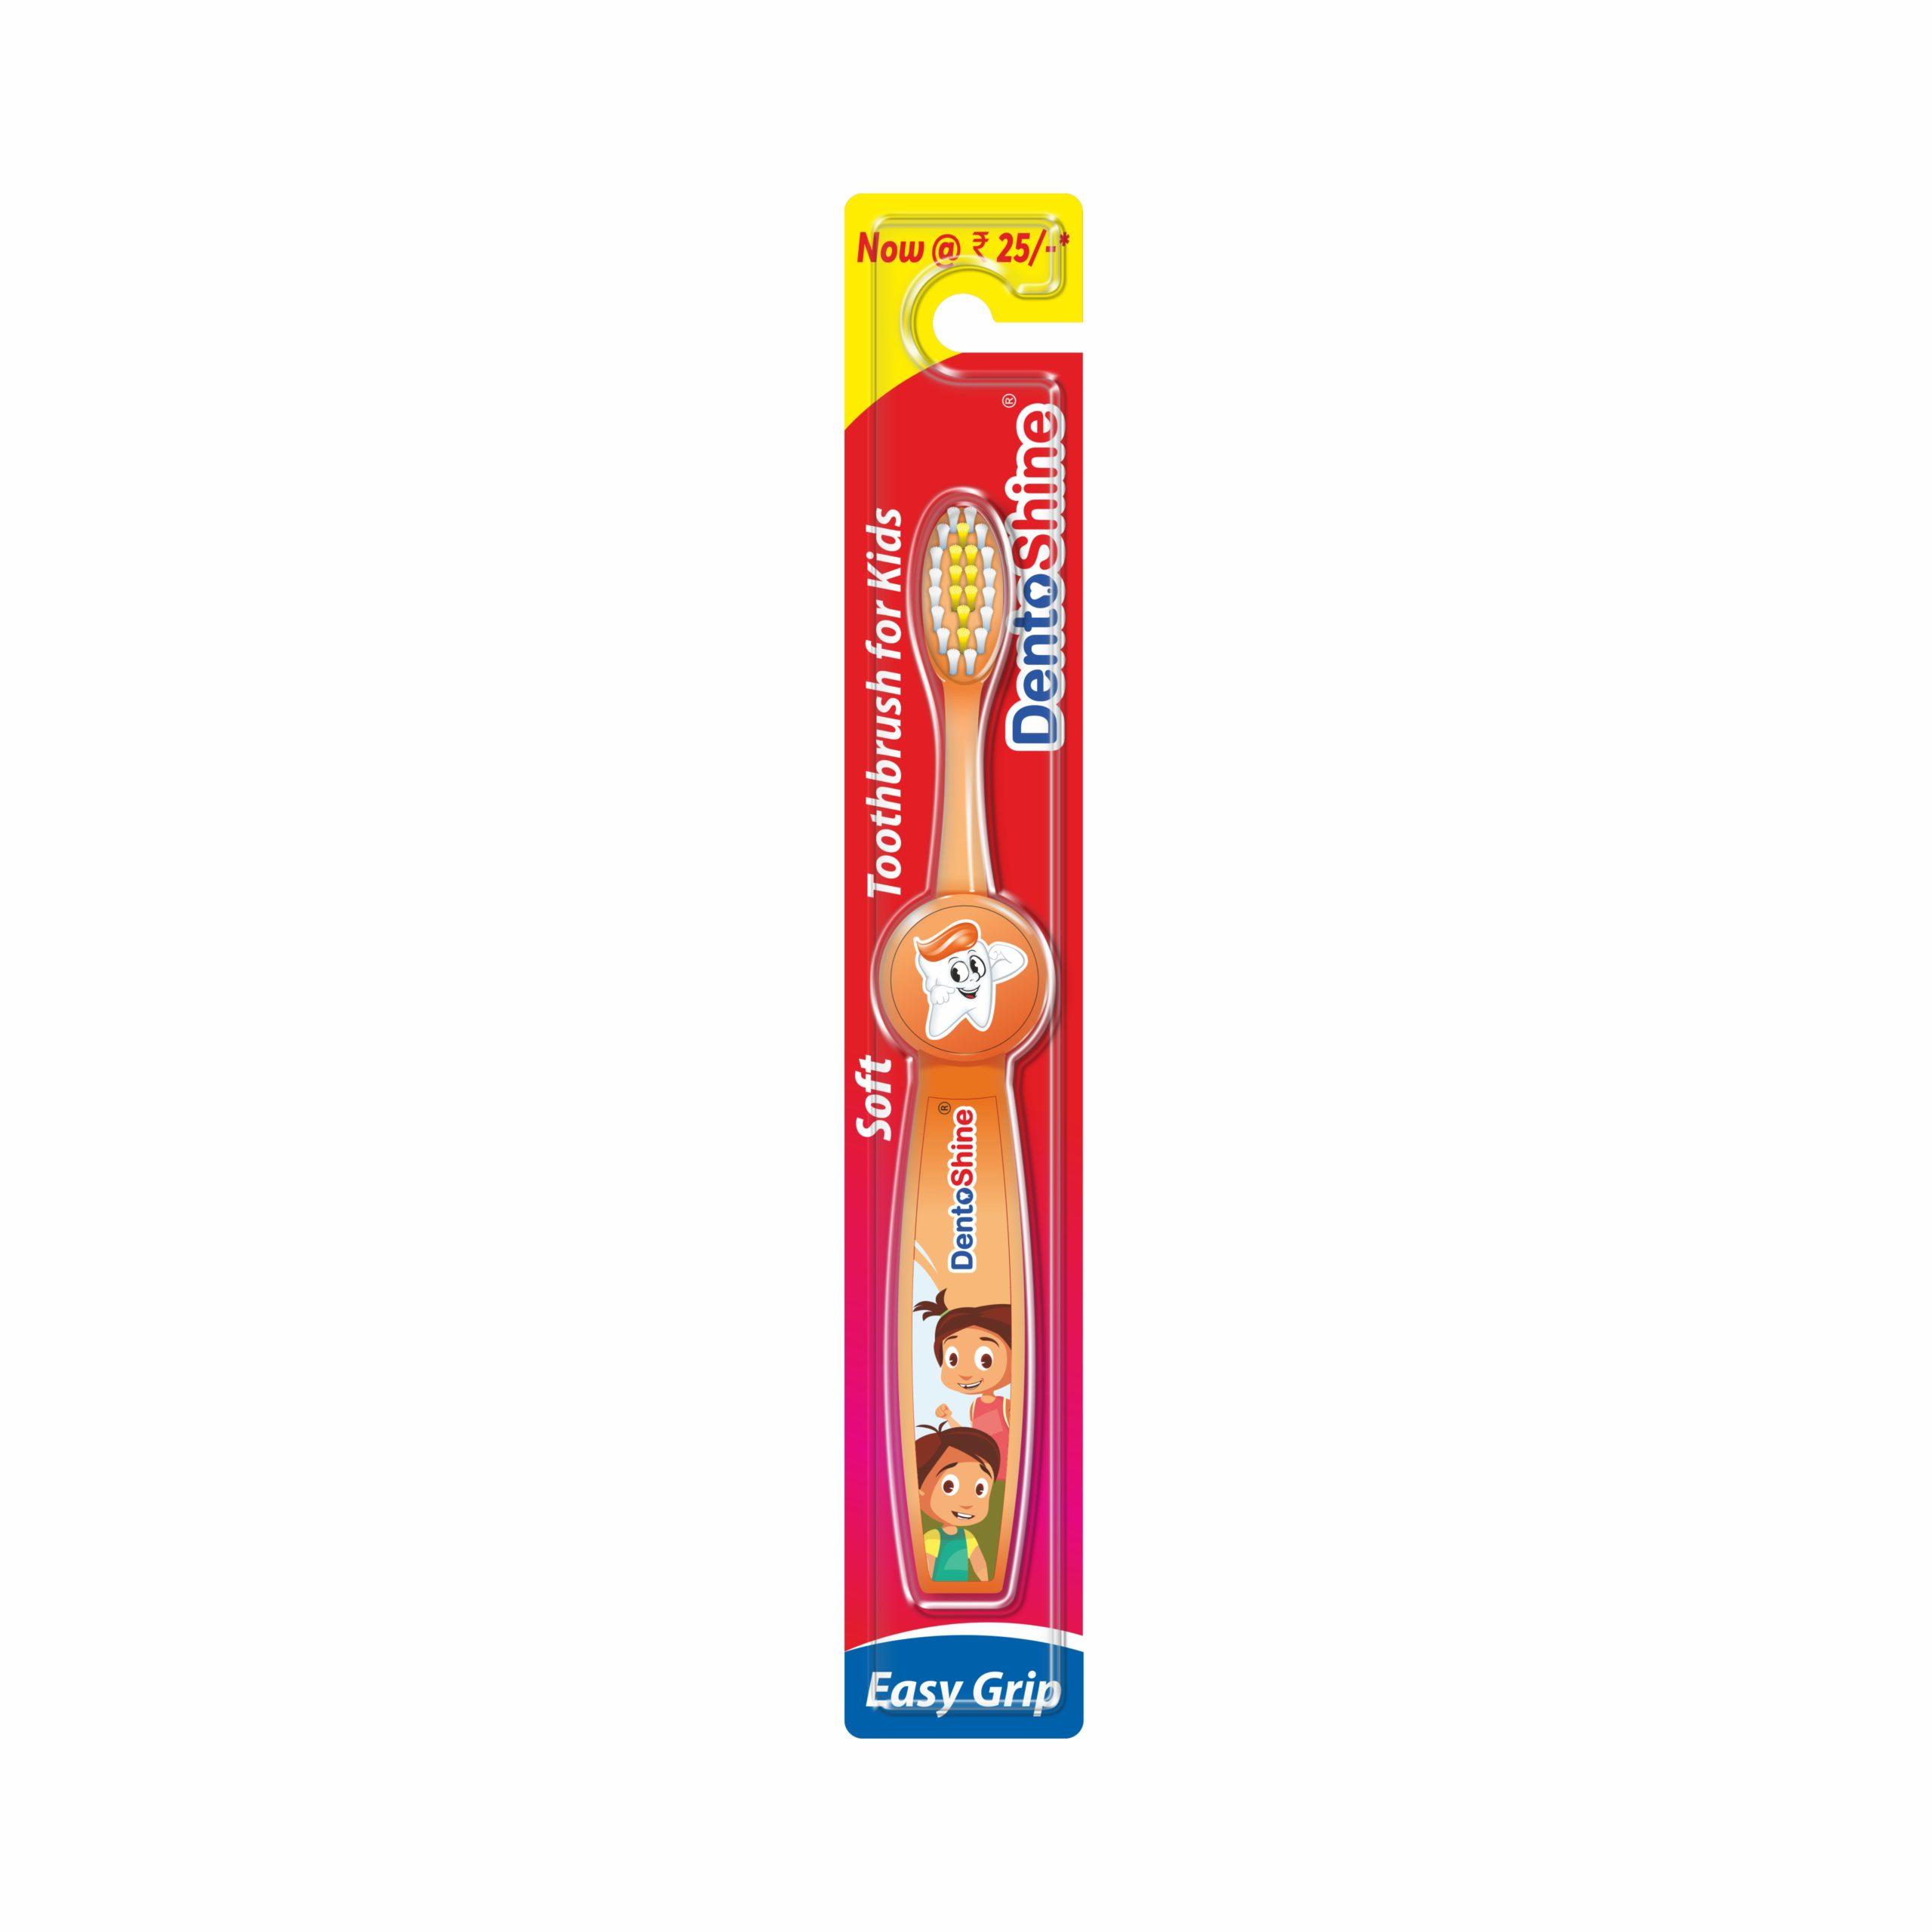 Easy Grip Toothbrush for Kids (Orange)